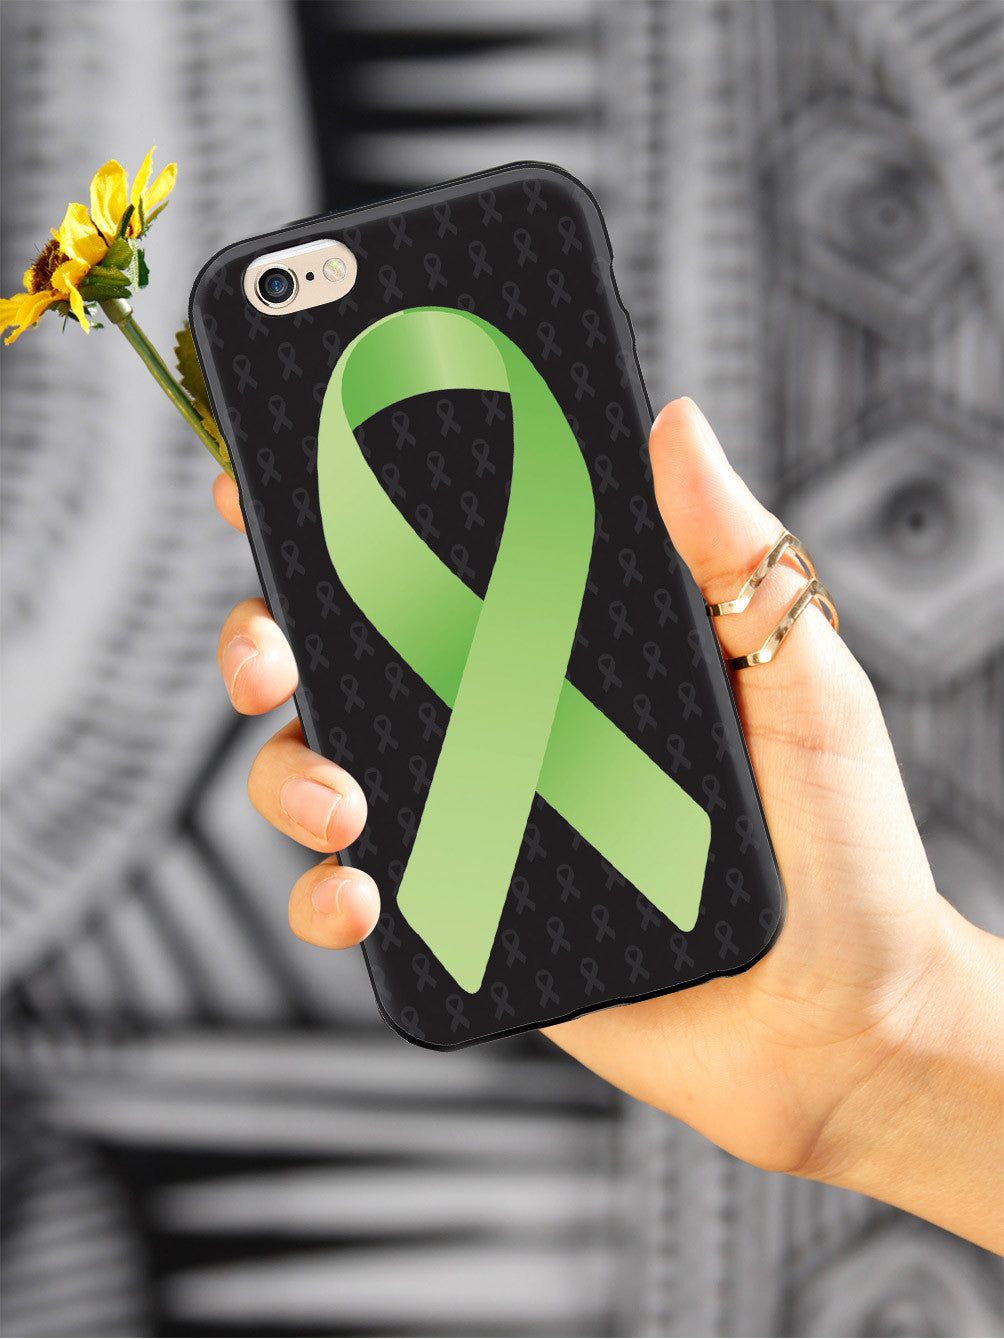 Lime Green Awareness Ribbon - Black Case